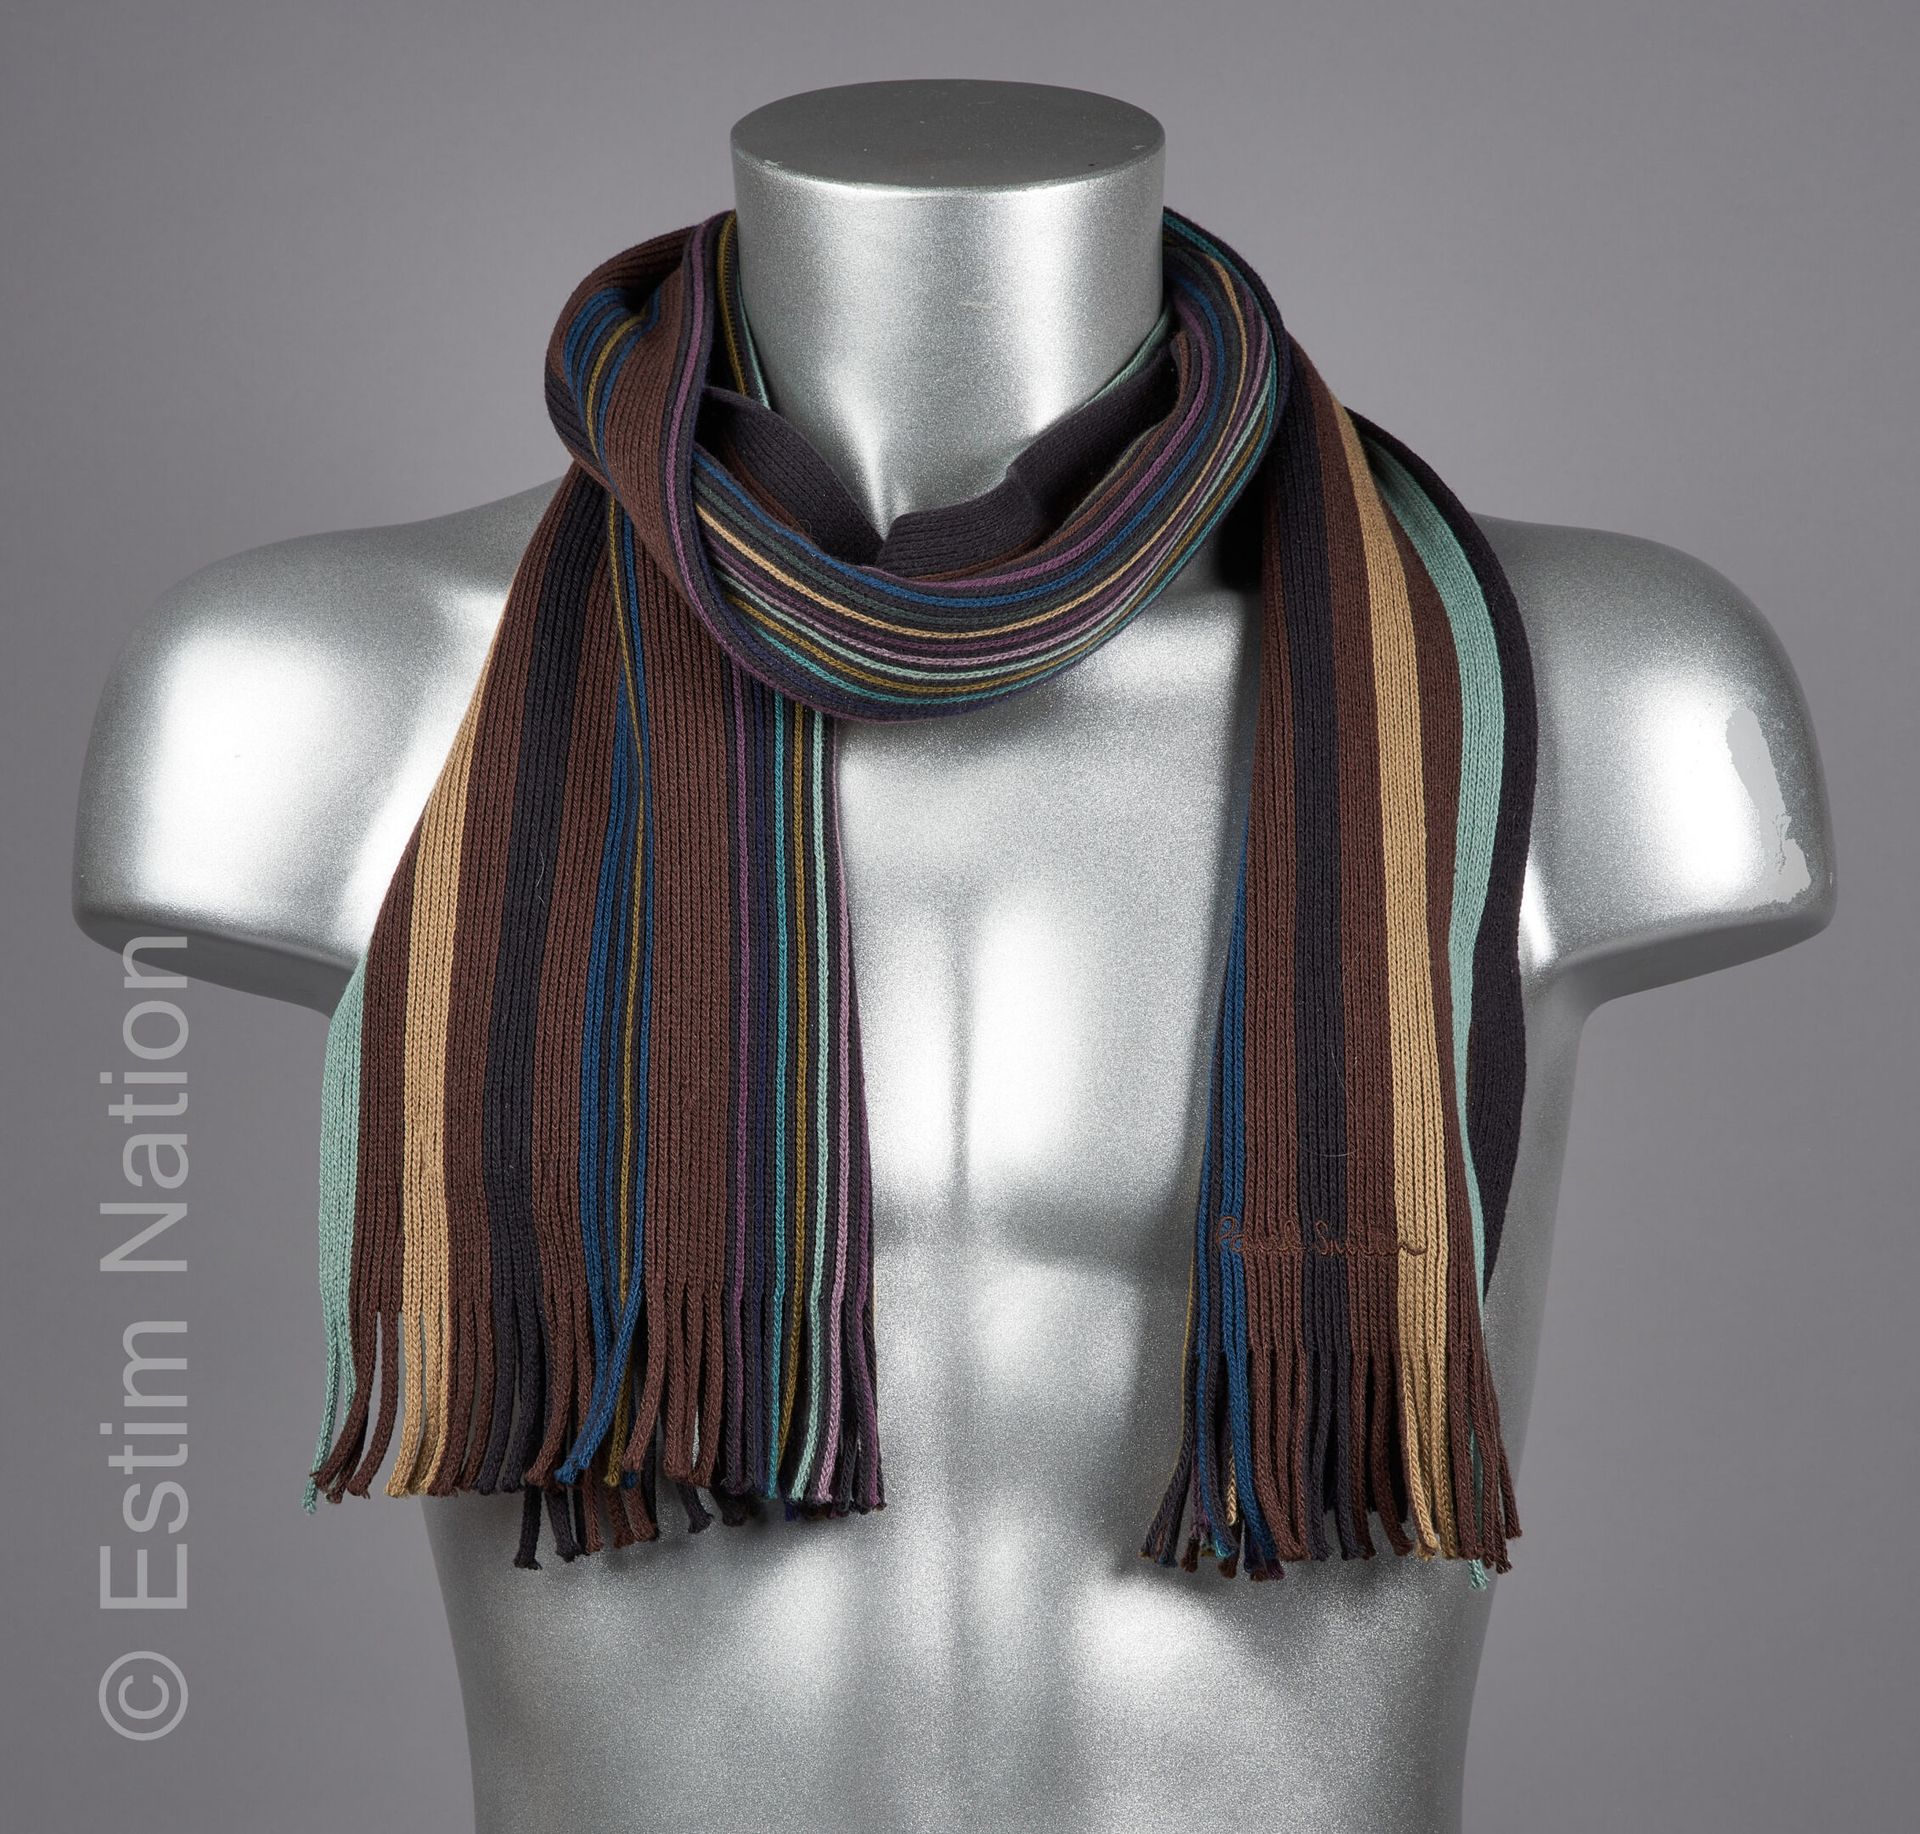 PAUL SMITH 100%羊绒围巾，棕色和不同颜色的bayadère，标签为 "Paul Smith"。

长1米50，宽35厘米